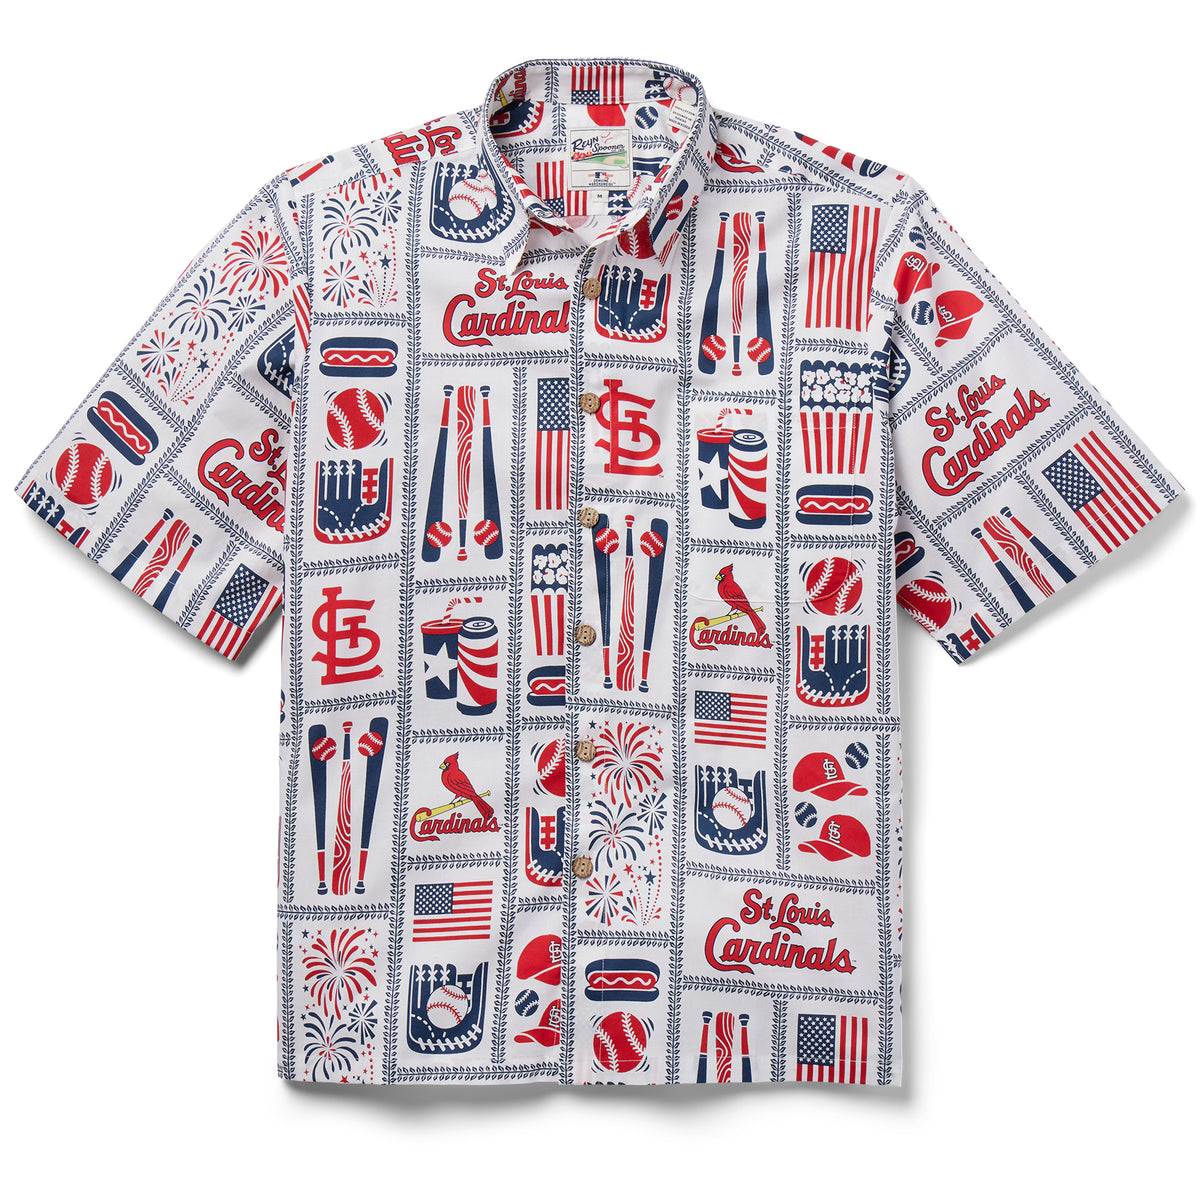 Women's Reyn Spooner White St. Louis Cardinals scenic Camp Button-Up Shirt Size: Medium